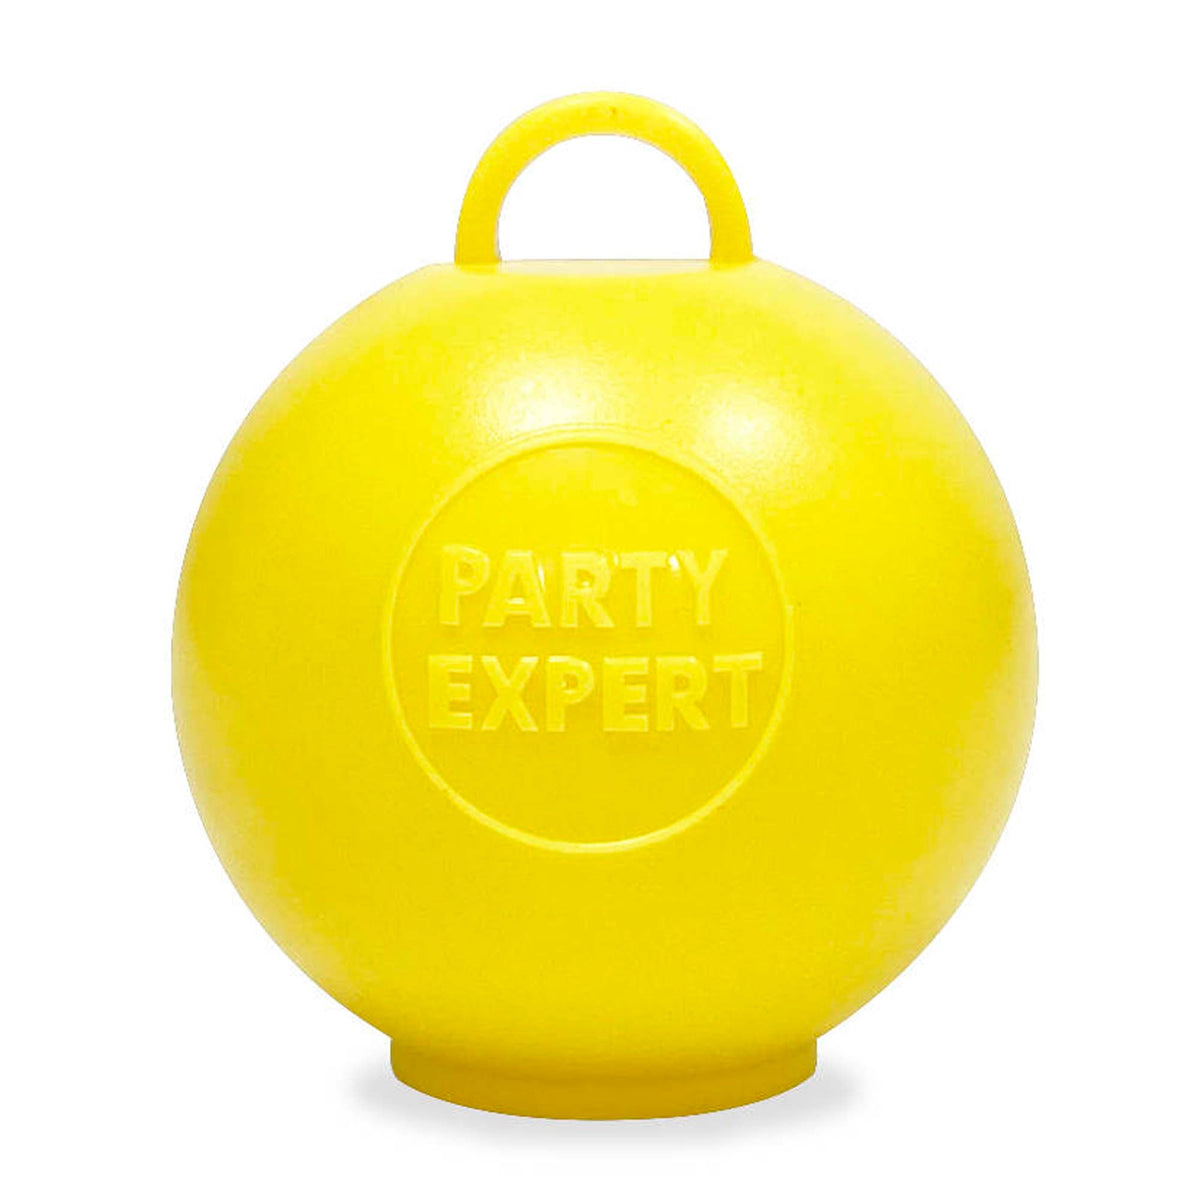 Dongguan Caipai Plastic Hardware Balloons Yellow Bubble Balloon Weight, 1 Count 810077659533